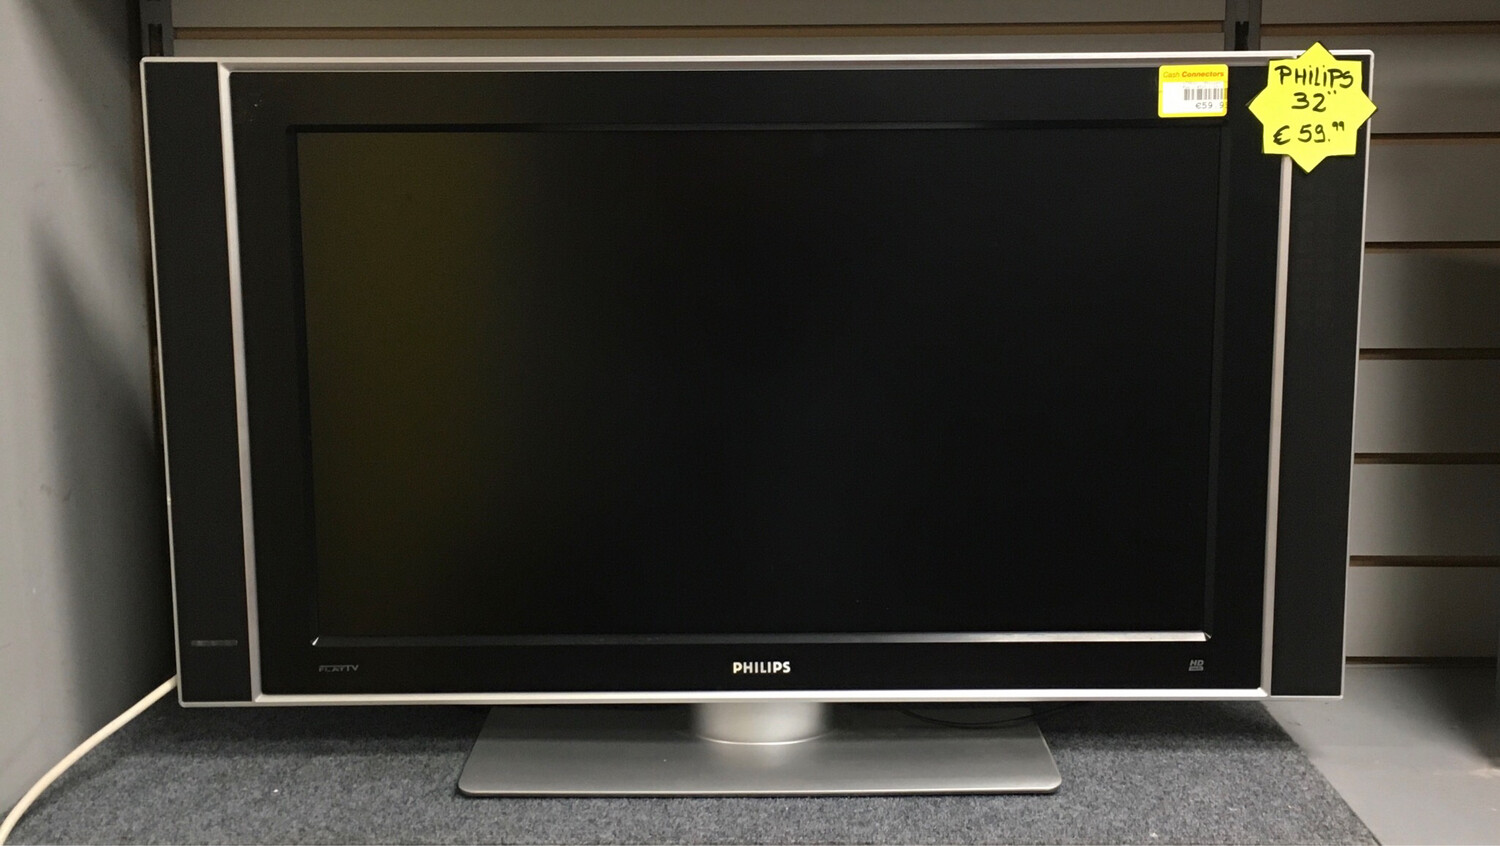 LCD PHILIPS TV 32" Philips LC320W01-SL06